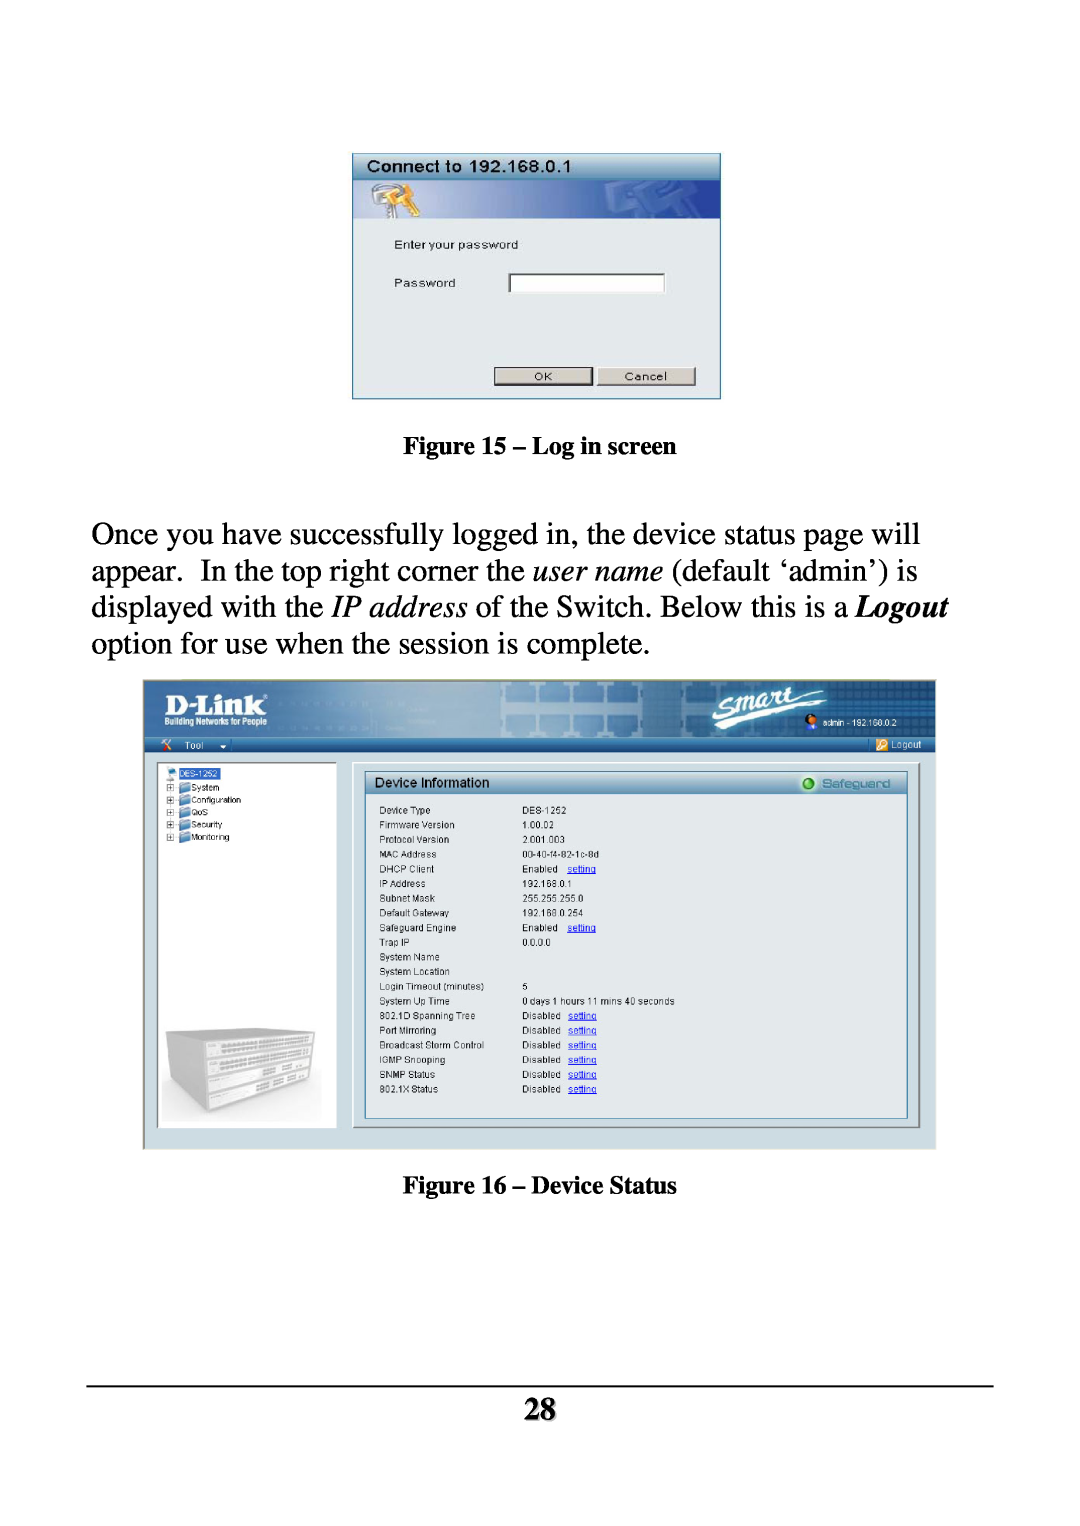 D-Link DES-1252 user manual Log in screen, Device Status 